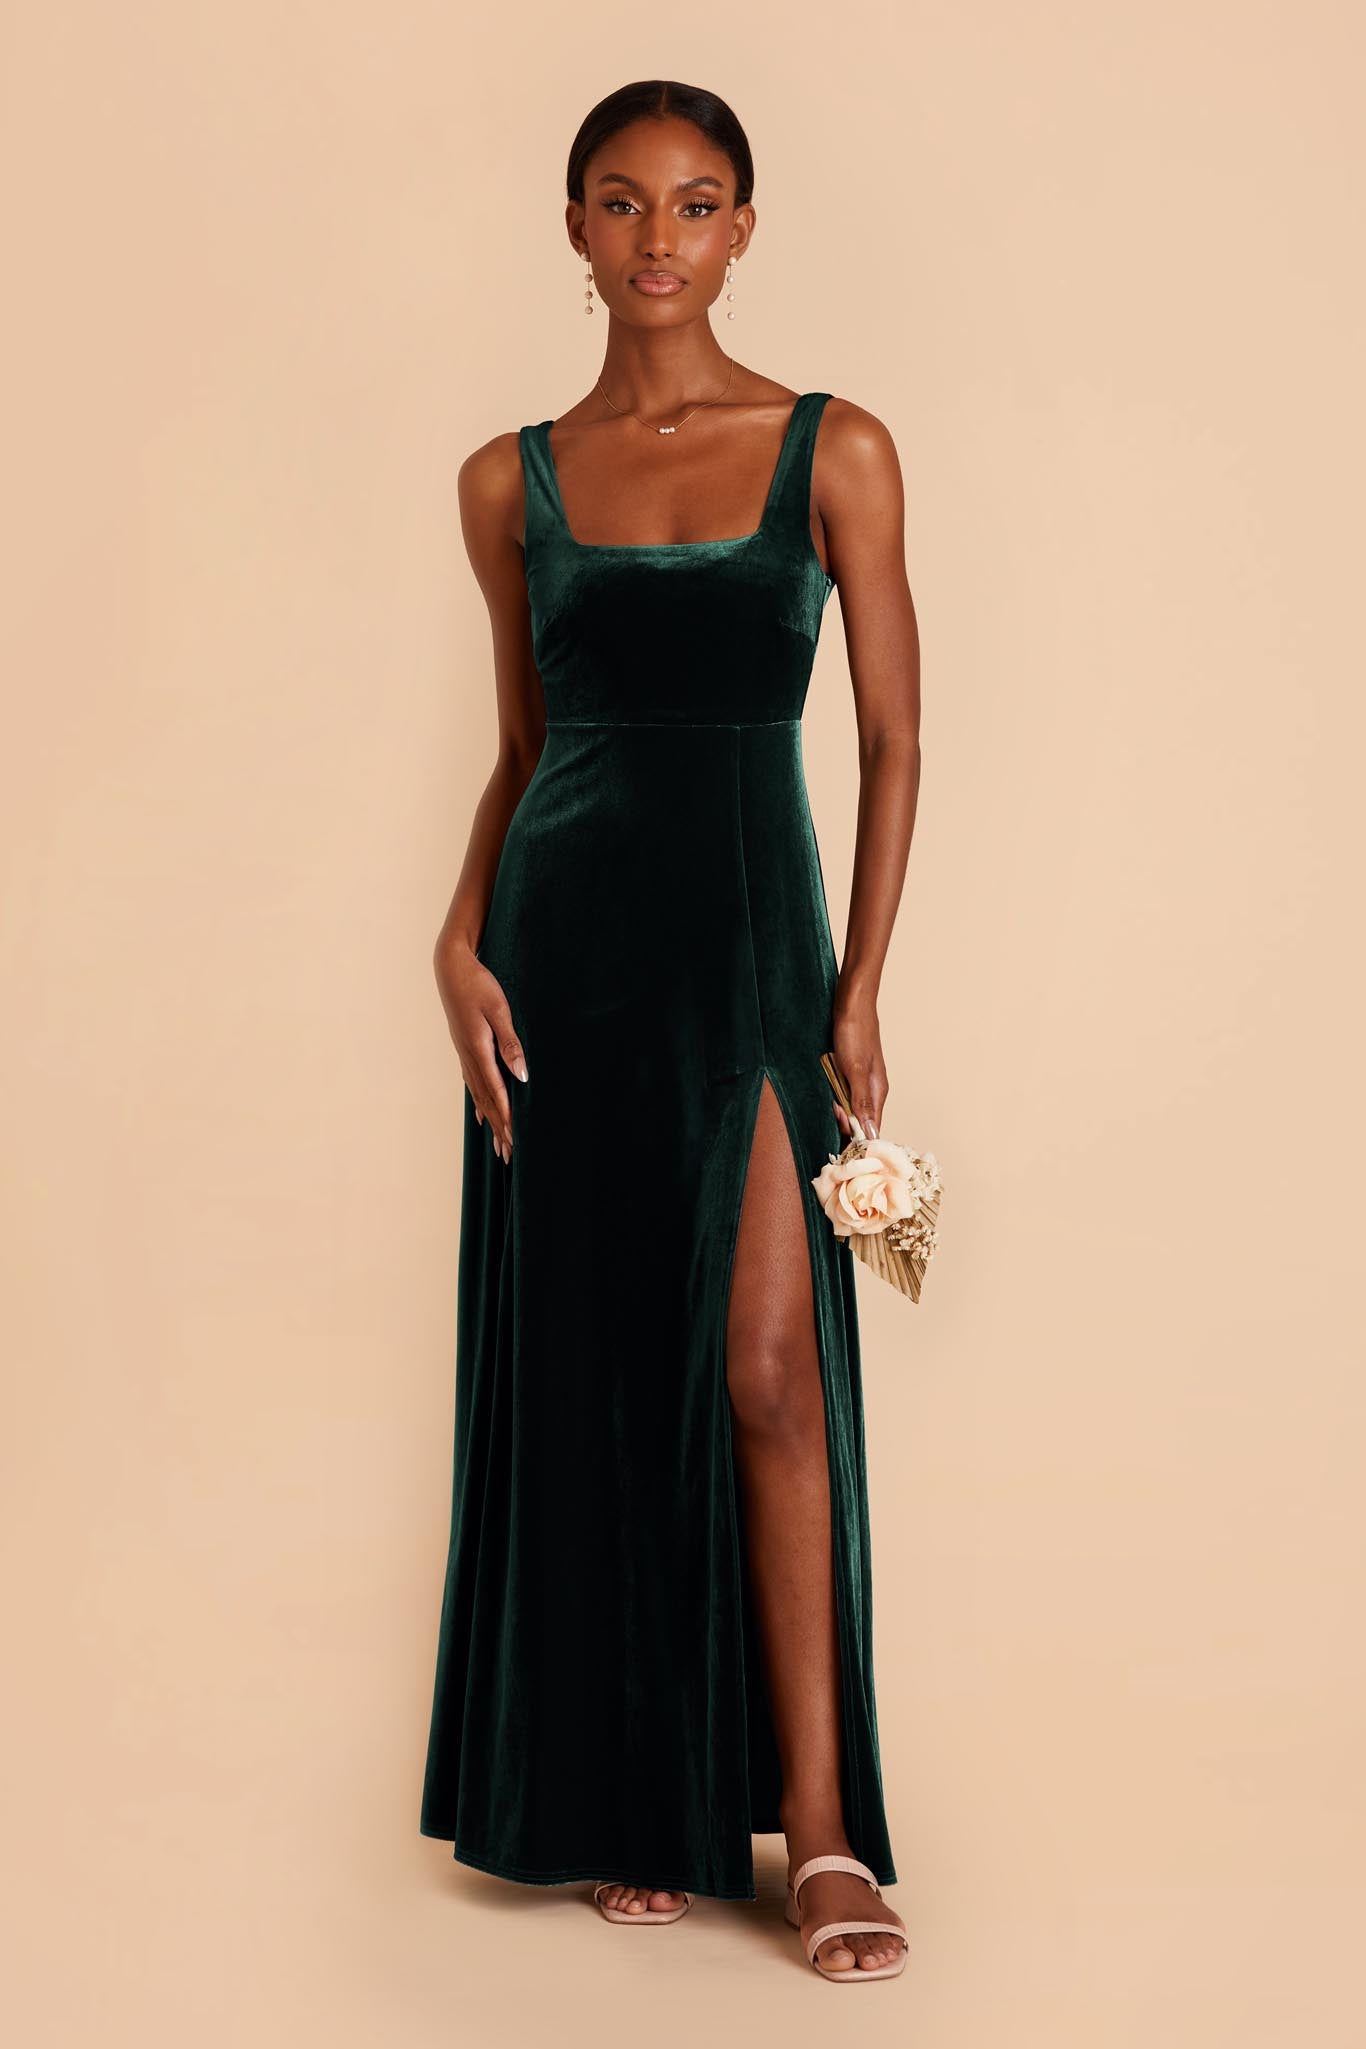 Emerald Alex Velvet Dress by Birdy Grey